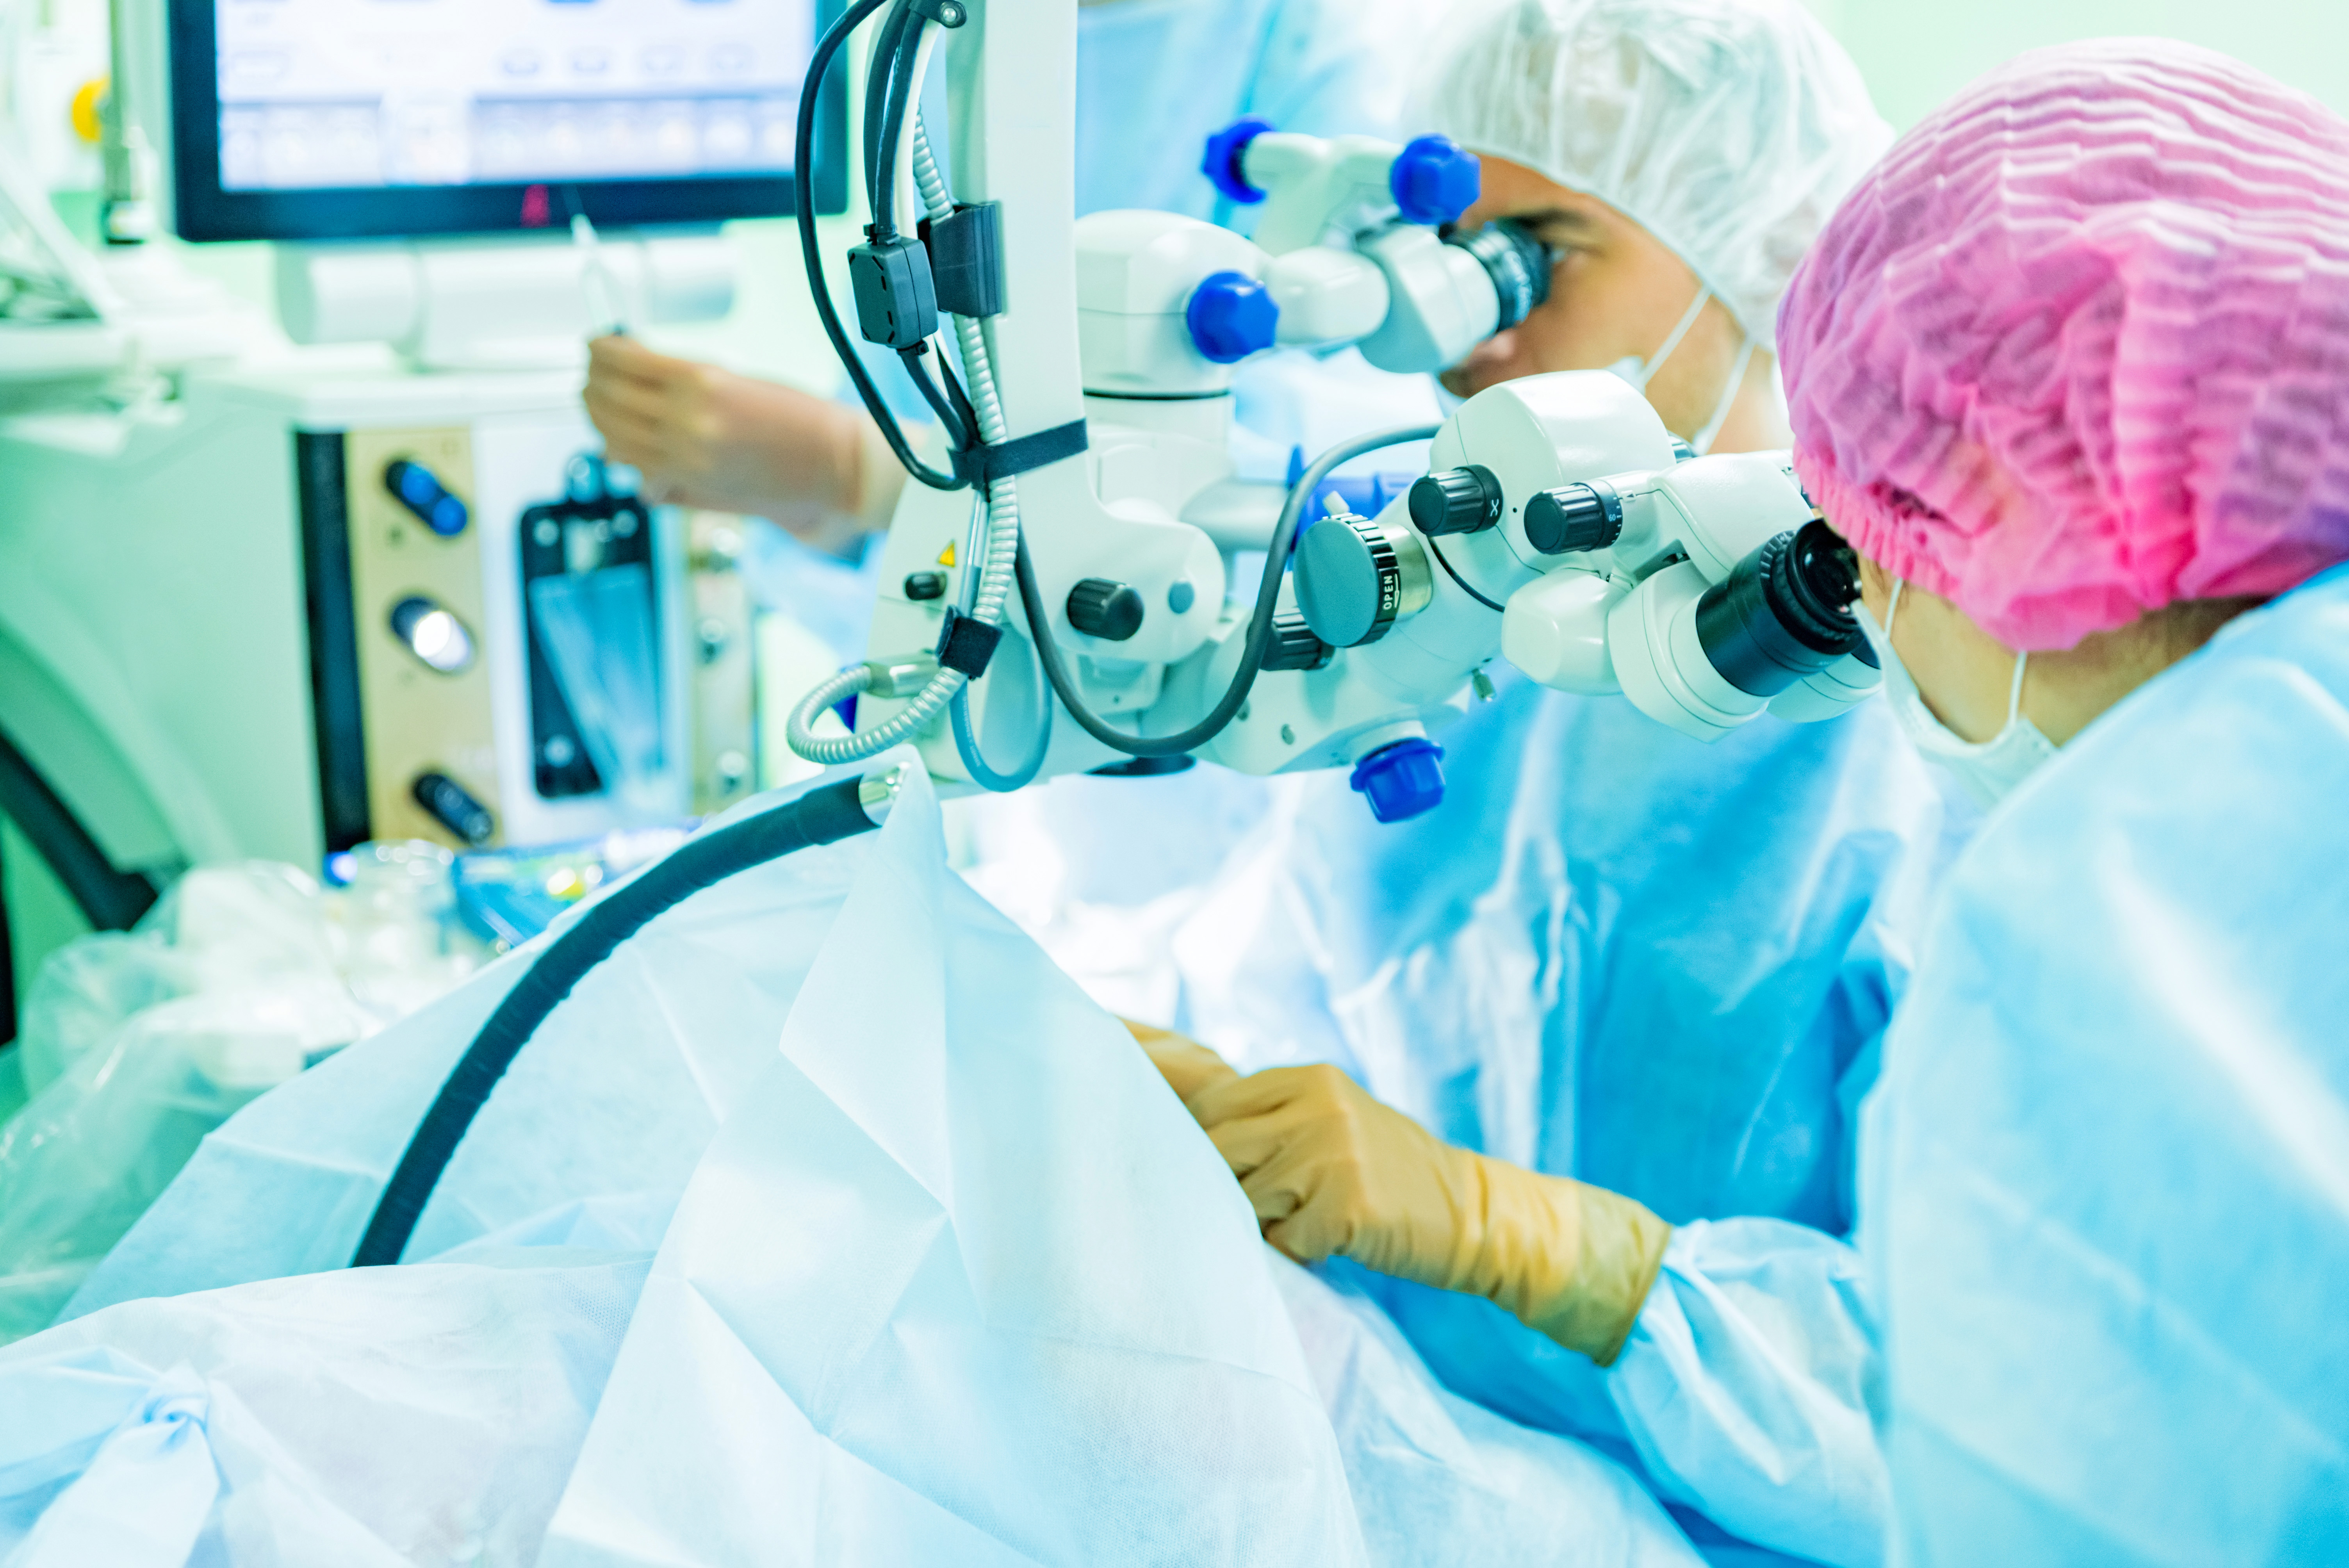 Endoscopy surgery